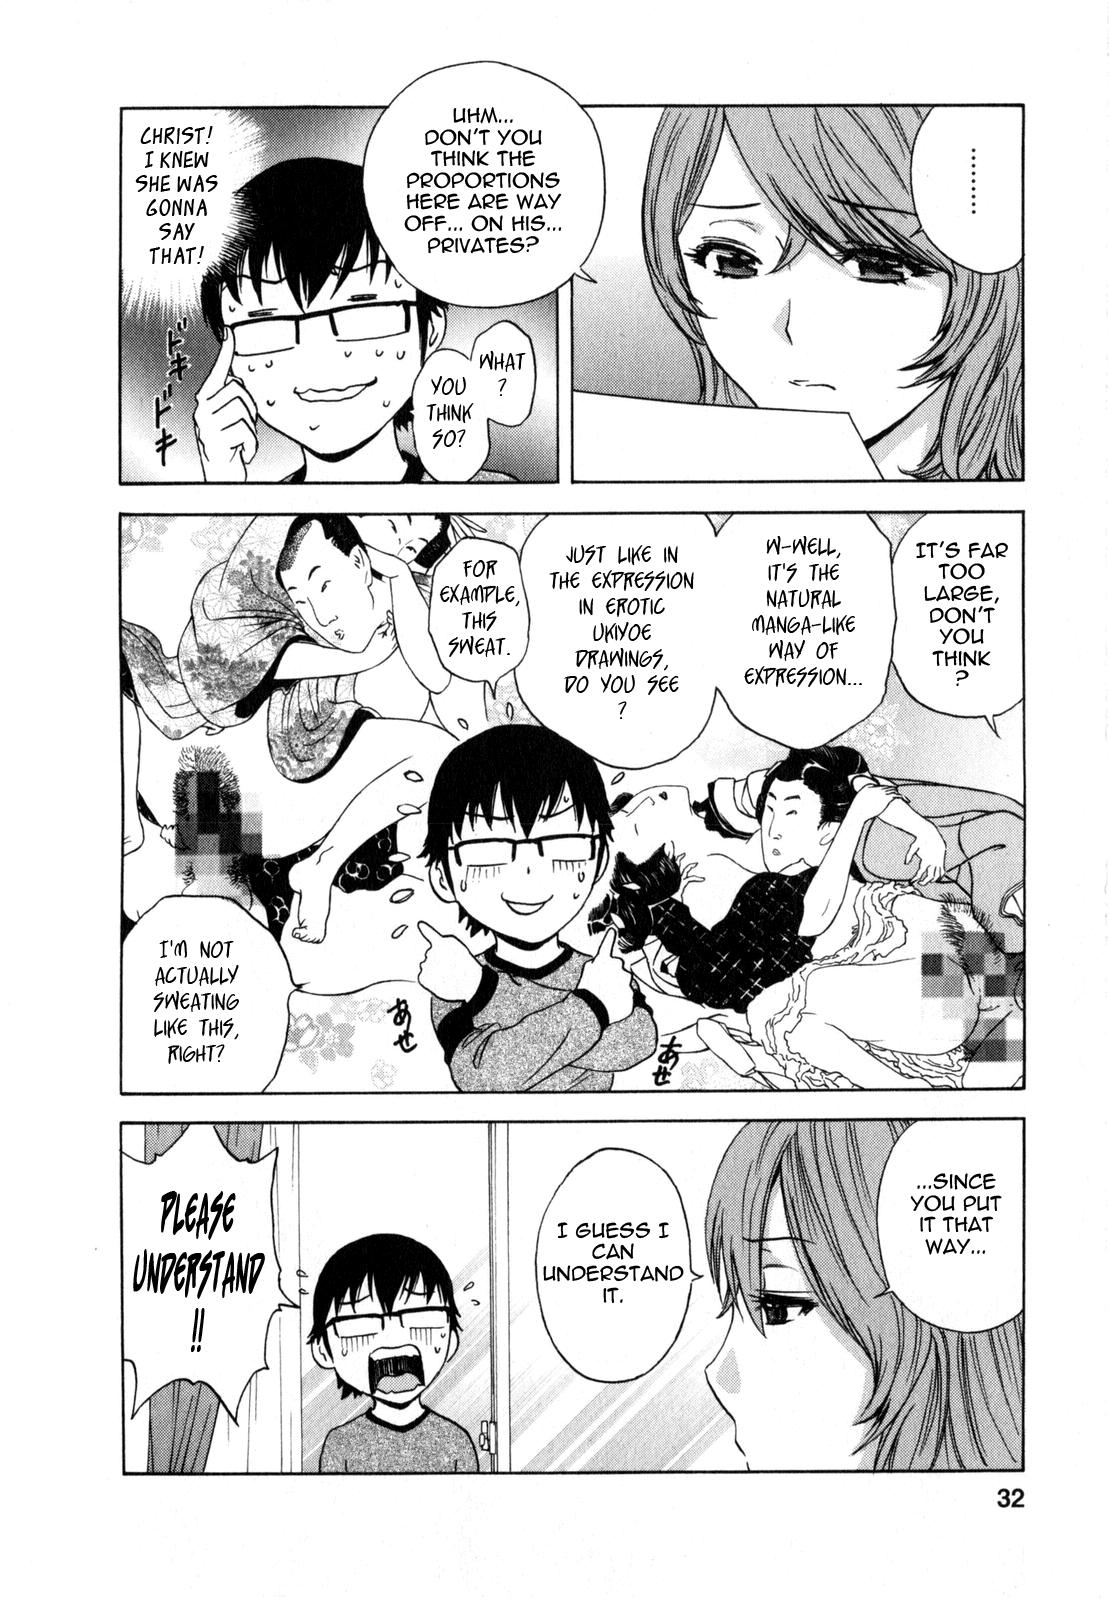 [Hidemaru] Life with Married Women Just Like a Manga 2 - Ch. 1-4 [English] {Tadanohito} 32